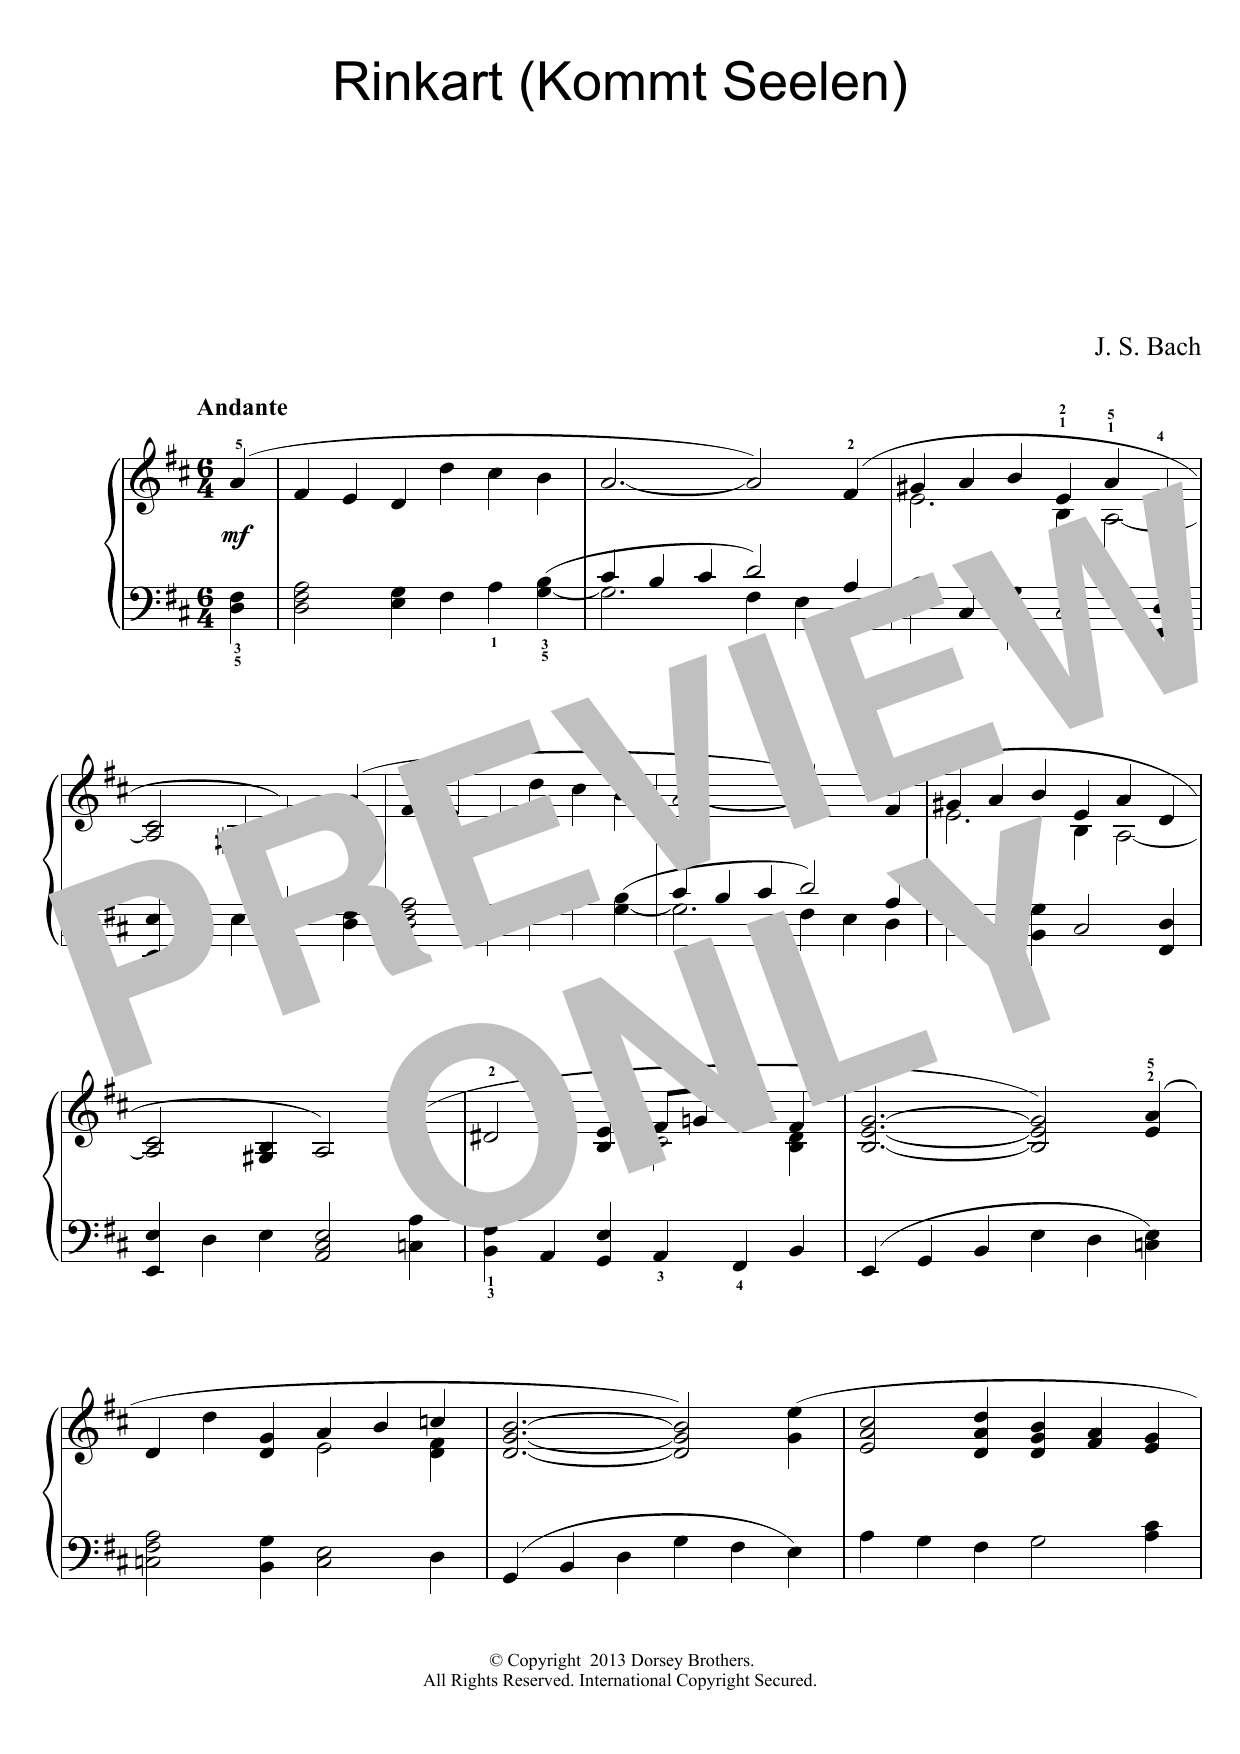 Johann Sebastian Bach Rinkart (Kommt Seelen) Sheet Music Notes & Chords for Piano - Download or Print PDF